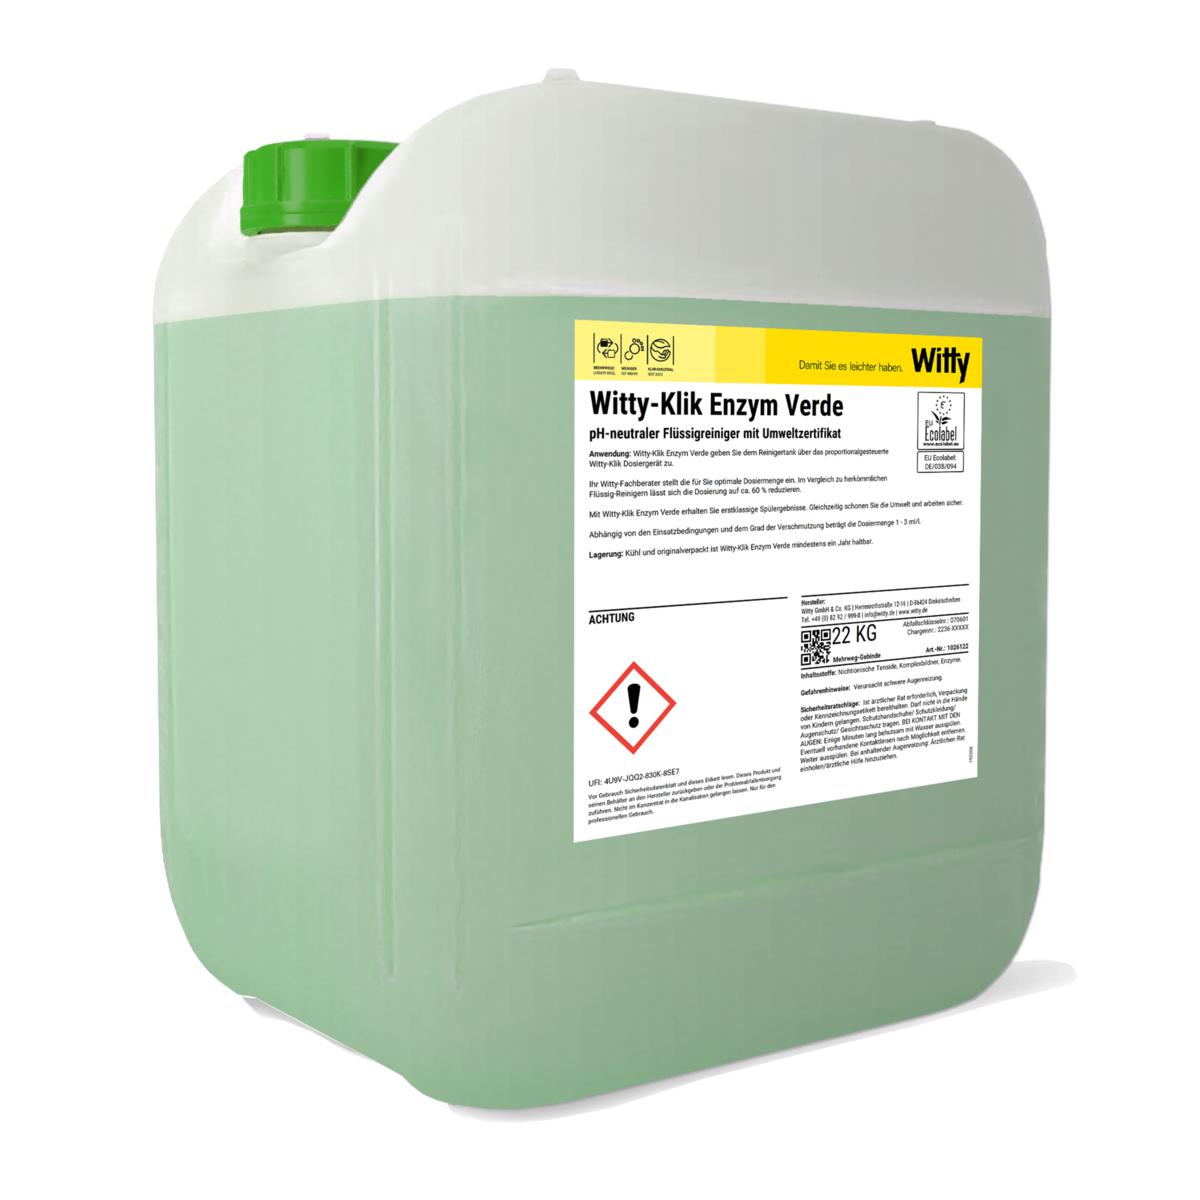 Witty-Klik Enzym Verde